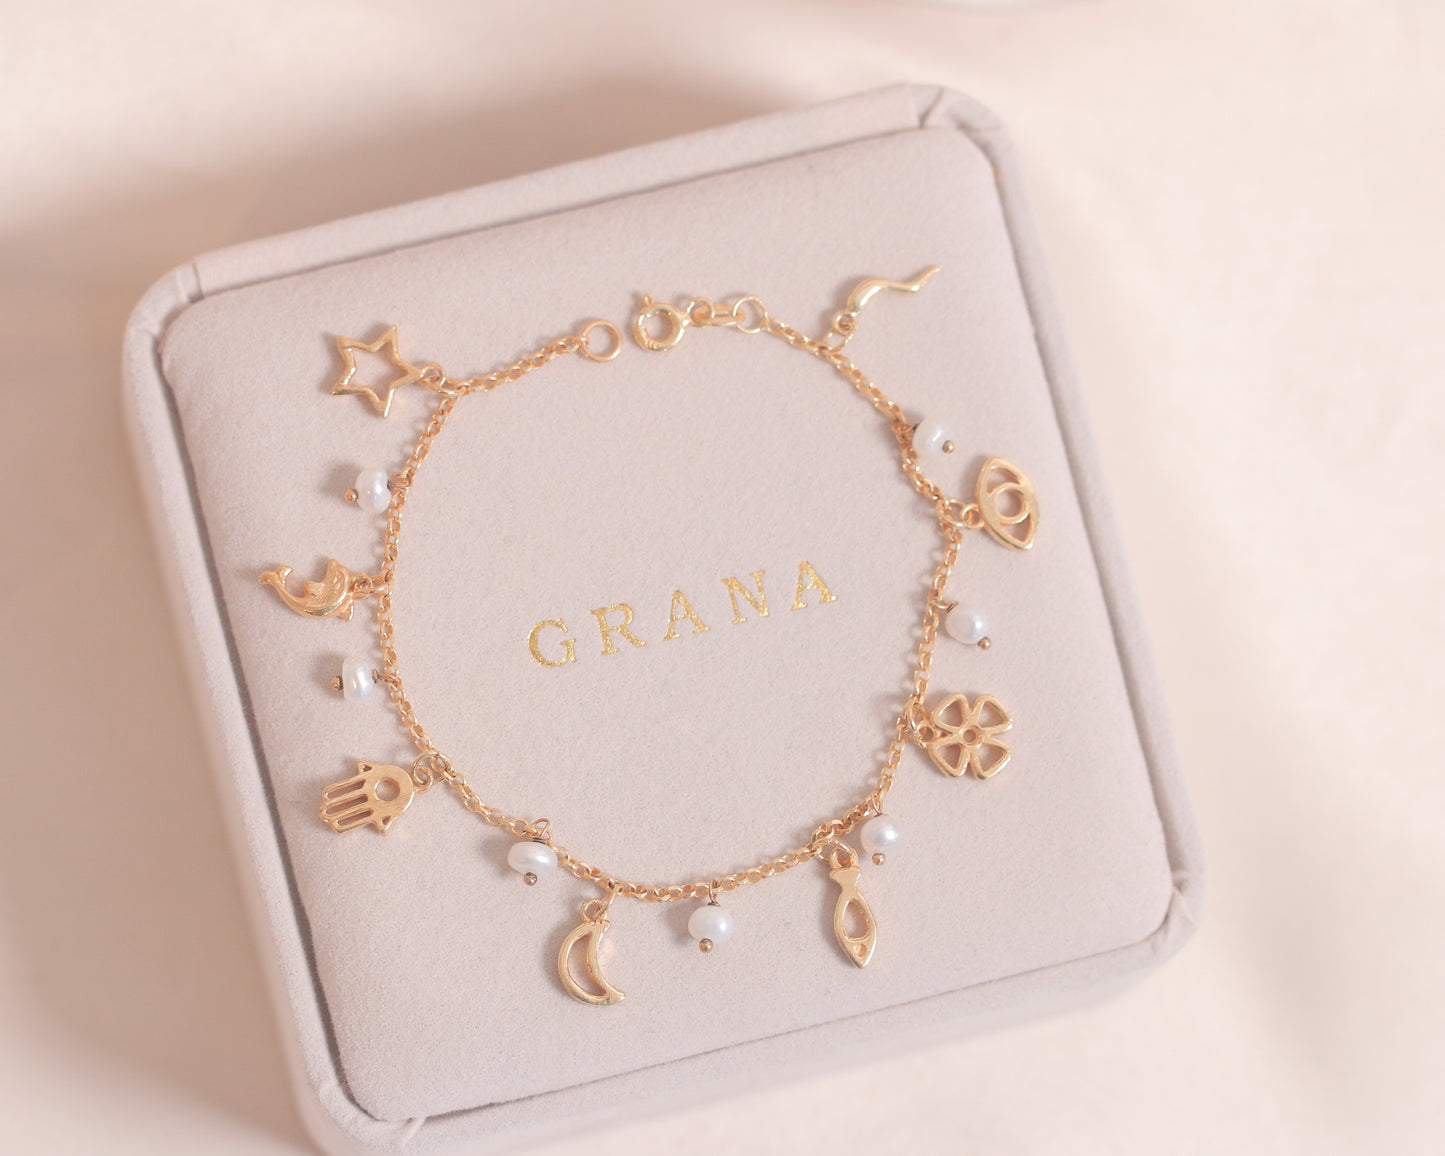 Grabeej Bracelet (Pearls)